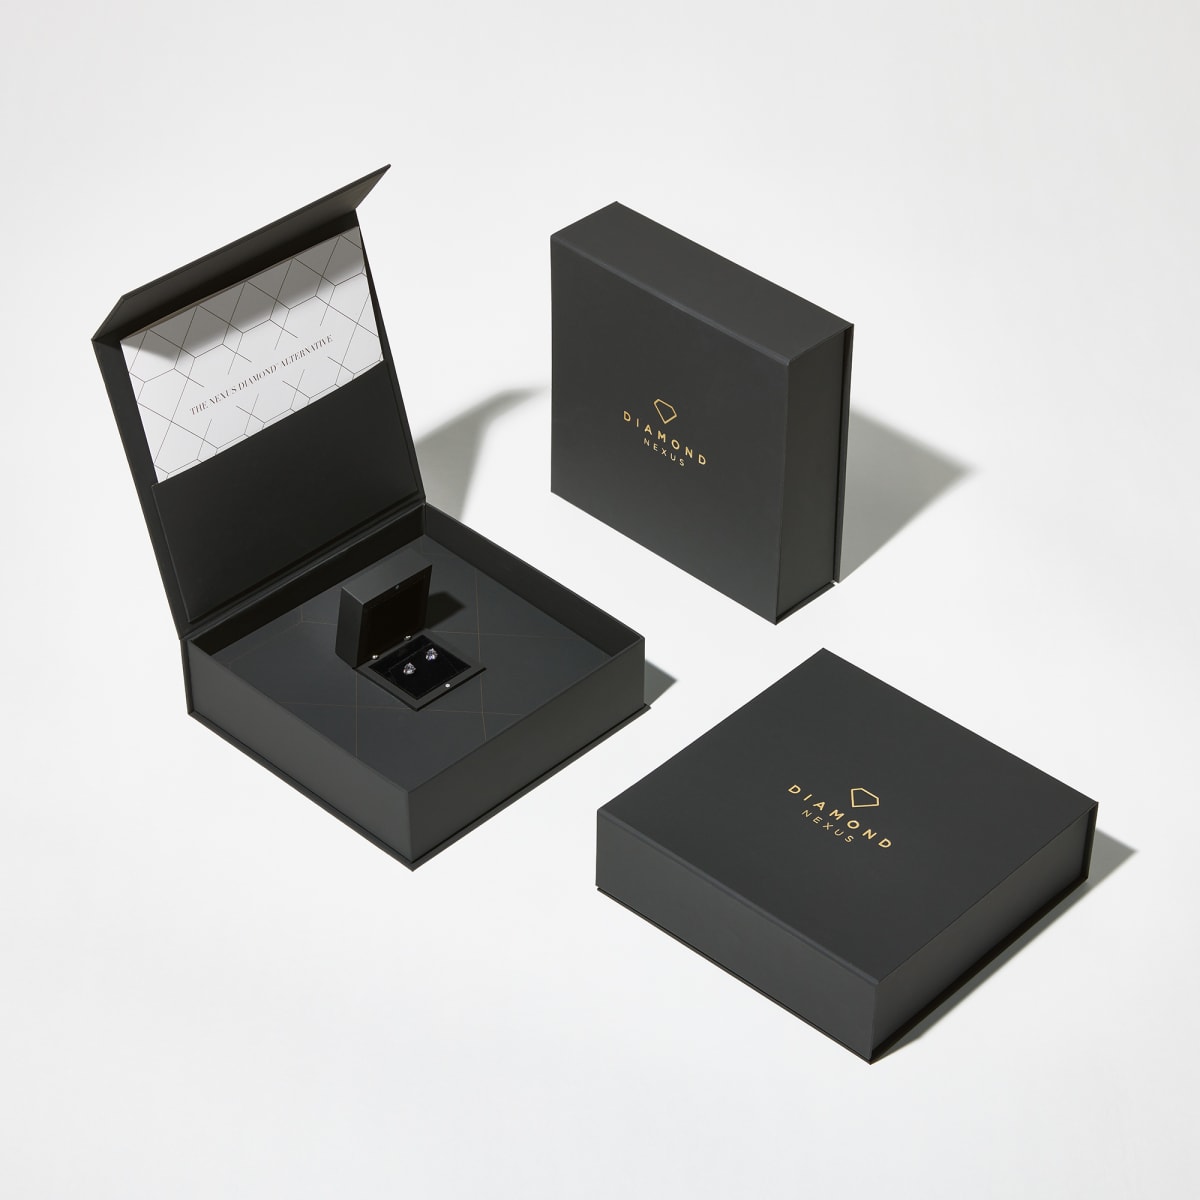 Leto Round-Marquise Cut Drop Earrings, 3.00 Cttw DEW, 14K White Gold, Nexus Diamond Alternative